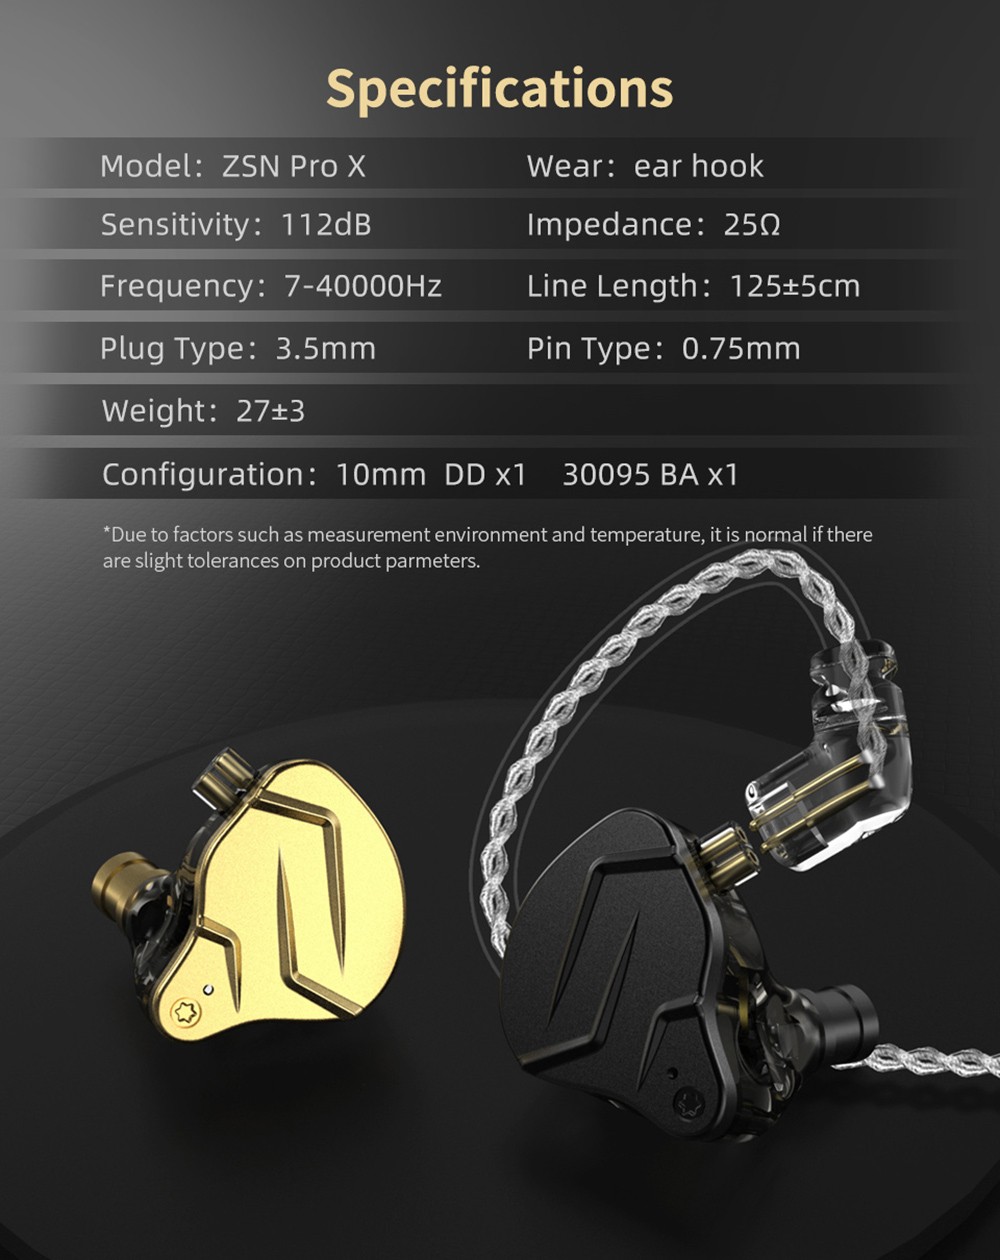 KZ ZSN Pro X Metal Earphones 1BA+1DD Hybrid technology HiFi Bass Earbuds with Mic- Black